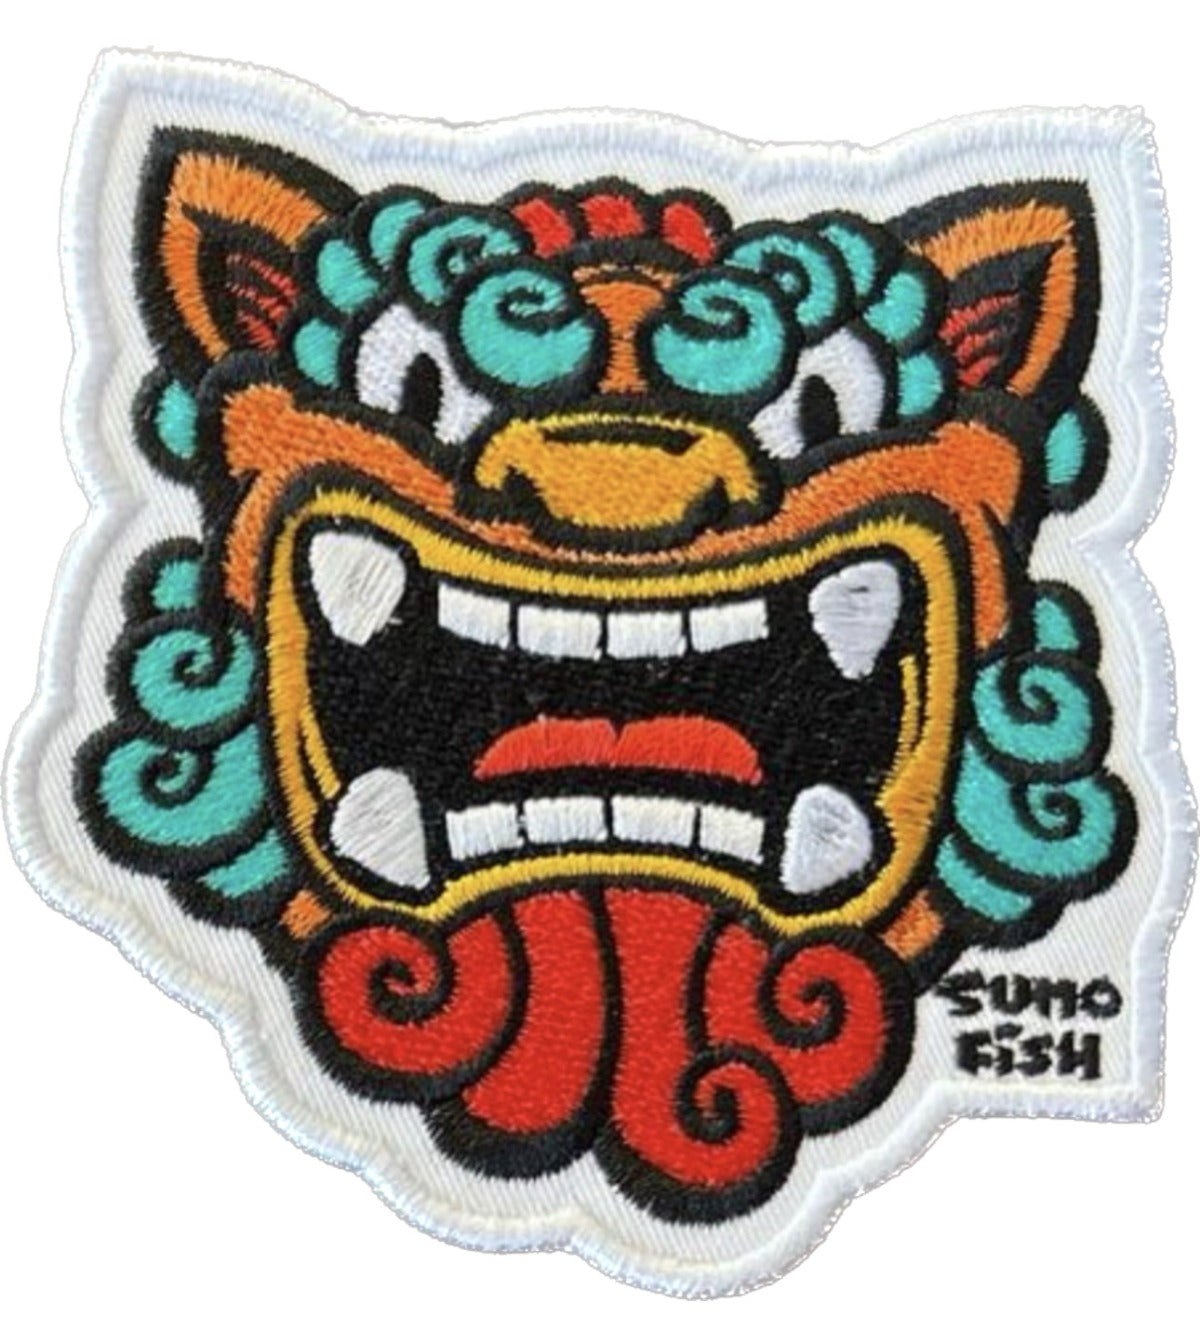 Sumofish Shisa  -The Okinawan Guardian Lion-Dog 3.5" x 3.5" Patch